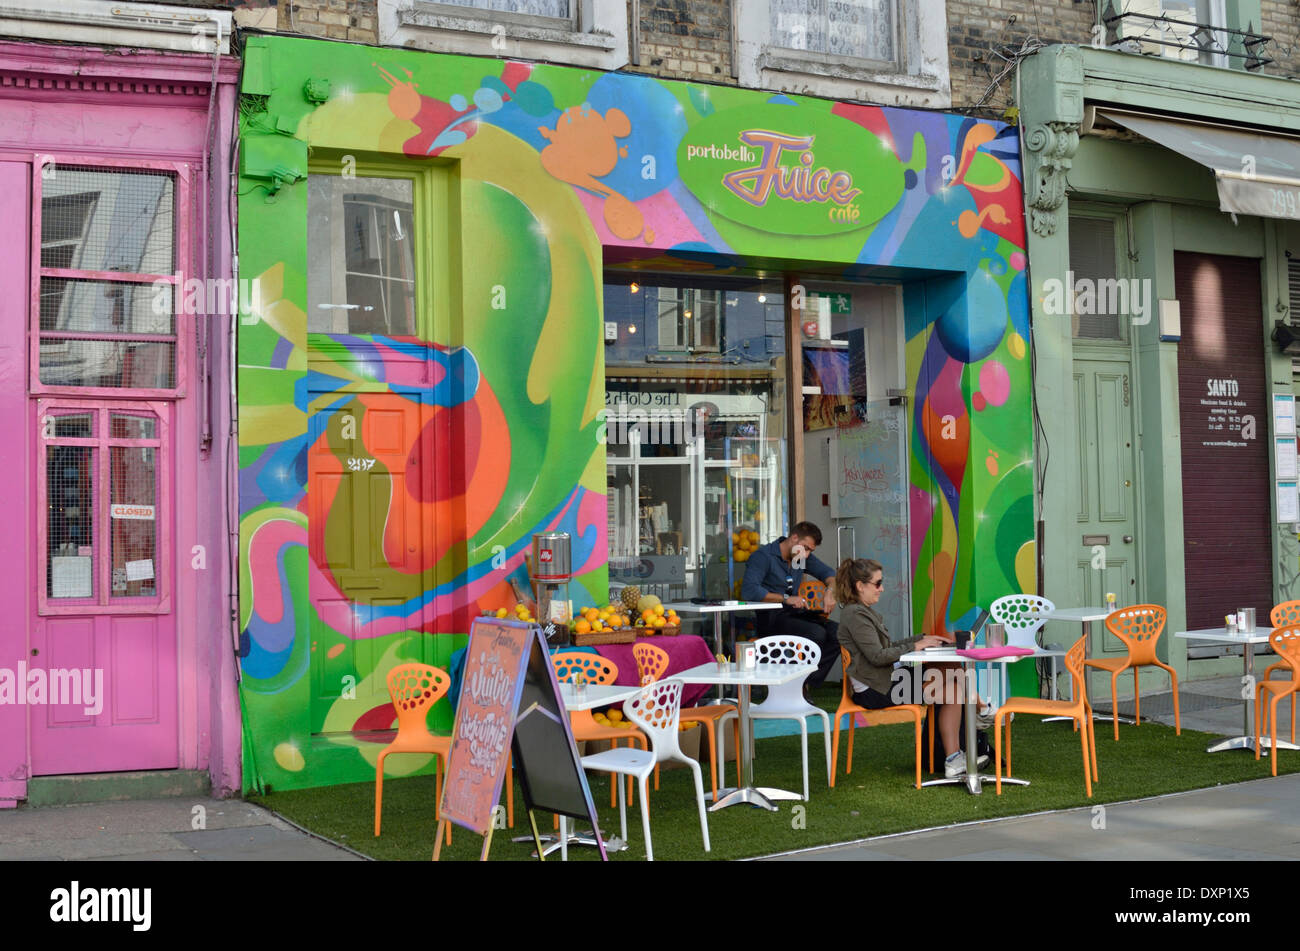 The colourful Portobello Juice Cafe in Portobello Road, Notting Hill, London, UK. Stock Photo